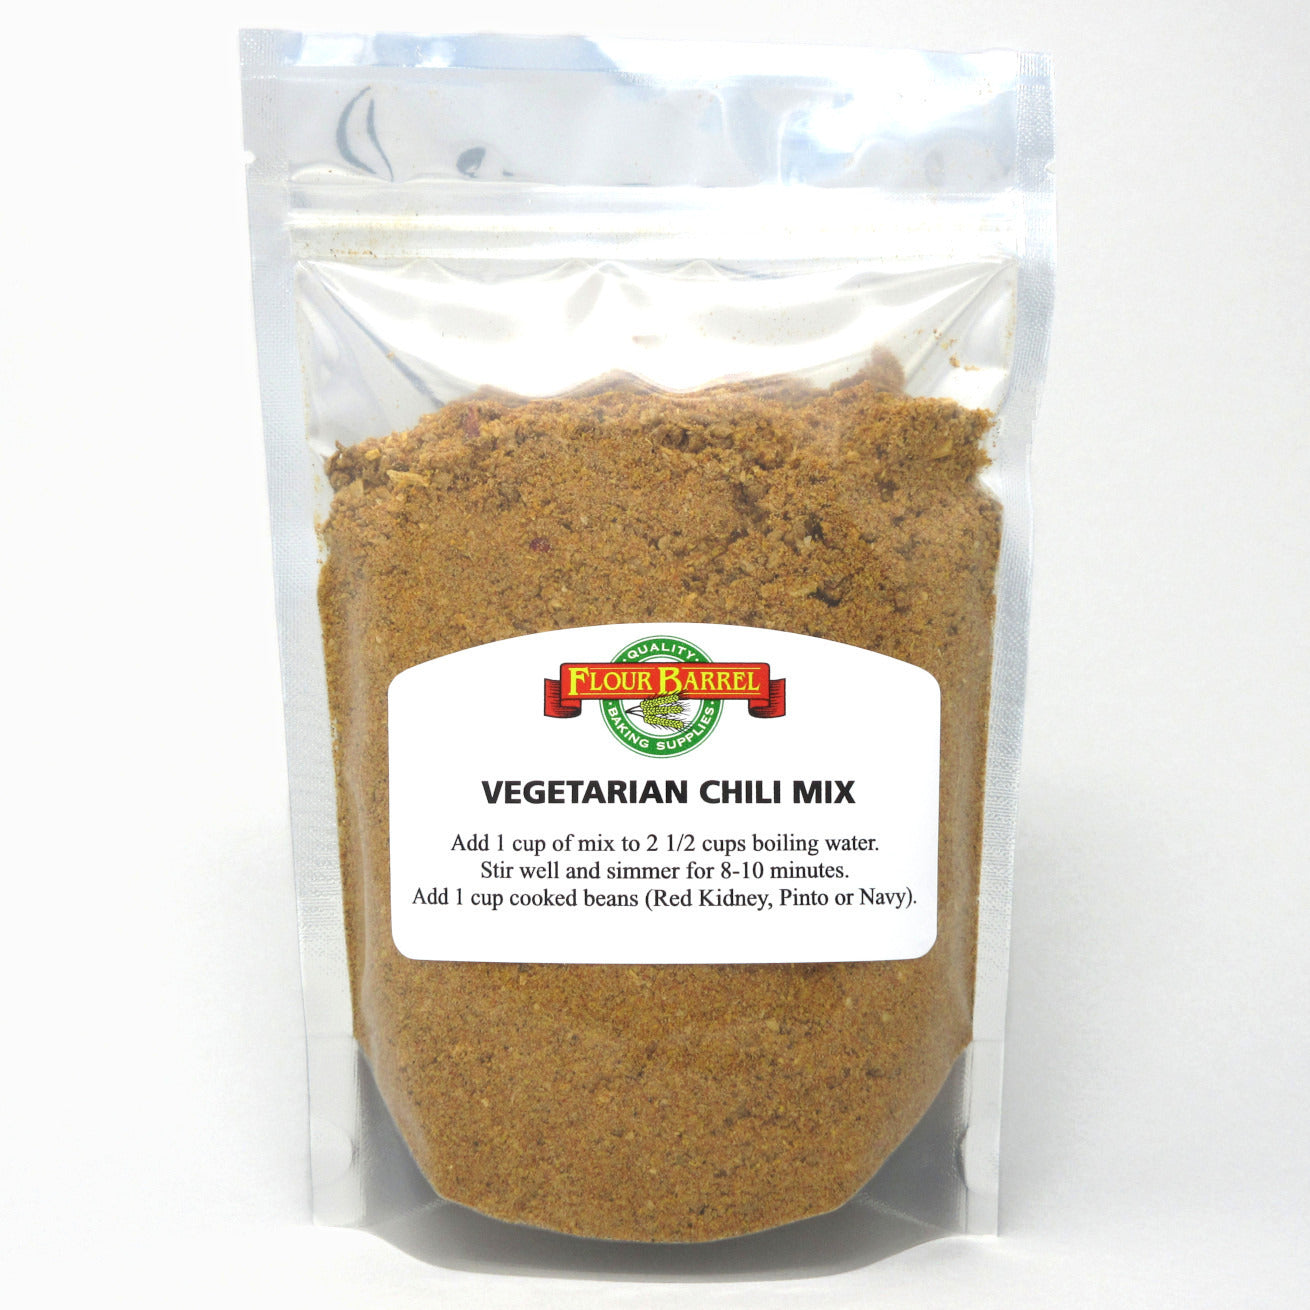 Flour Barrel product image - Vegetarian Chili Mix